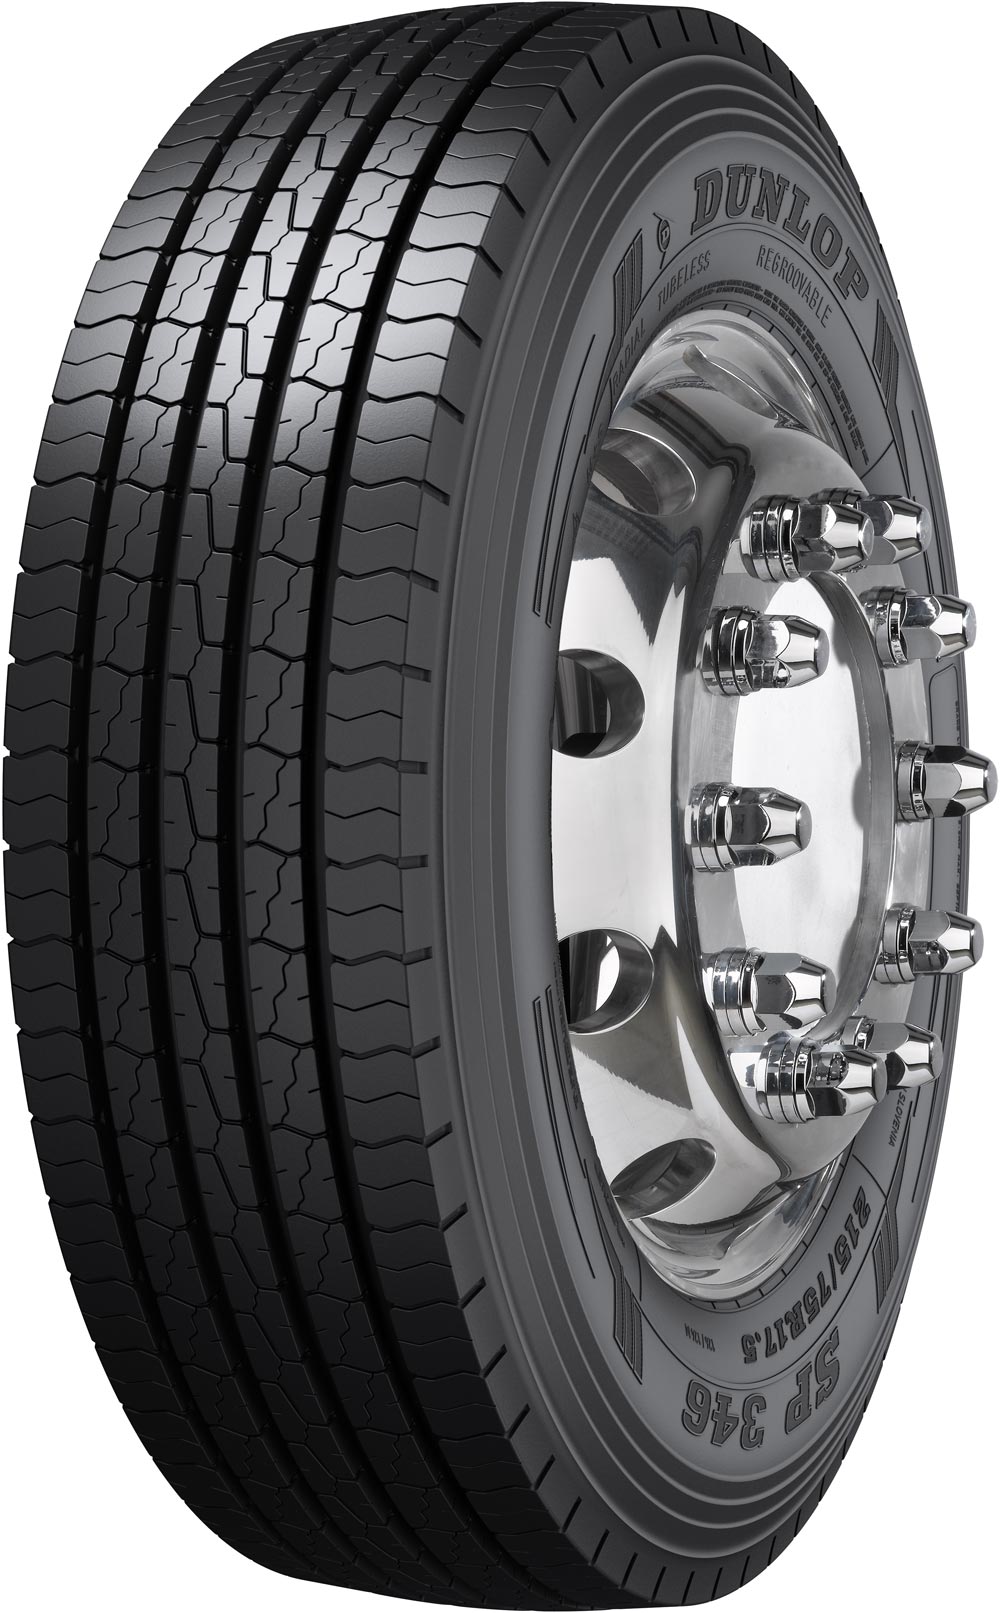 product_type-heavy_tires DUNLOP SP346 18 TL 315/70 R22.5 156L